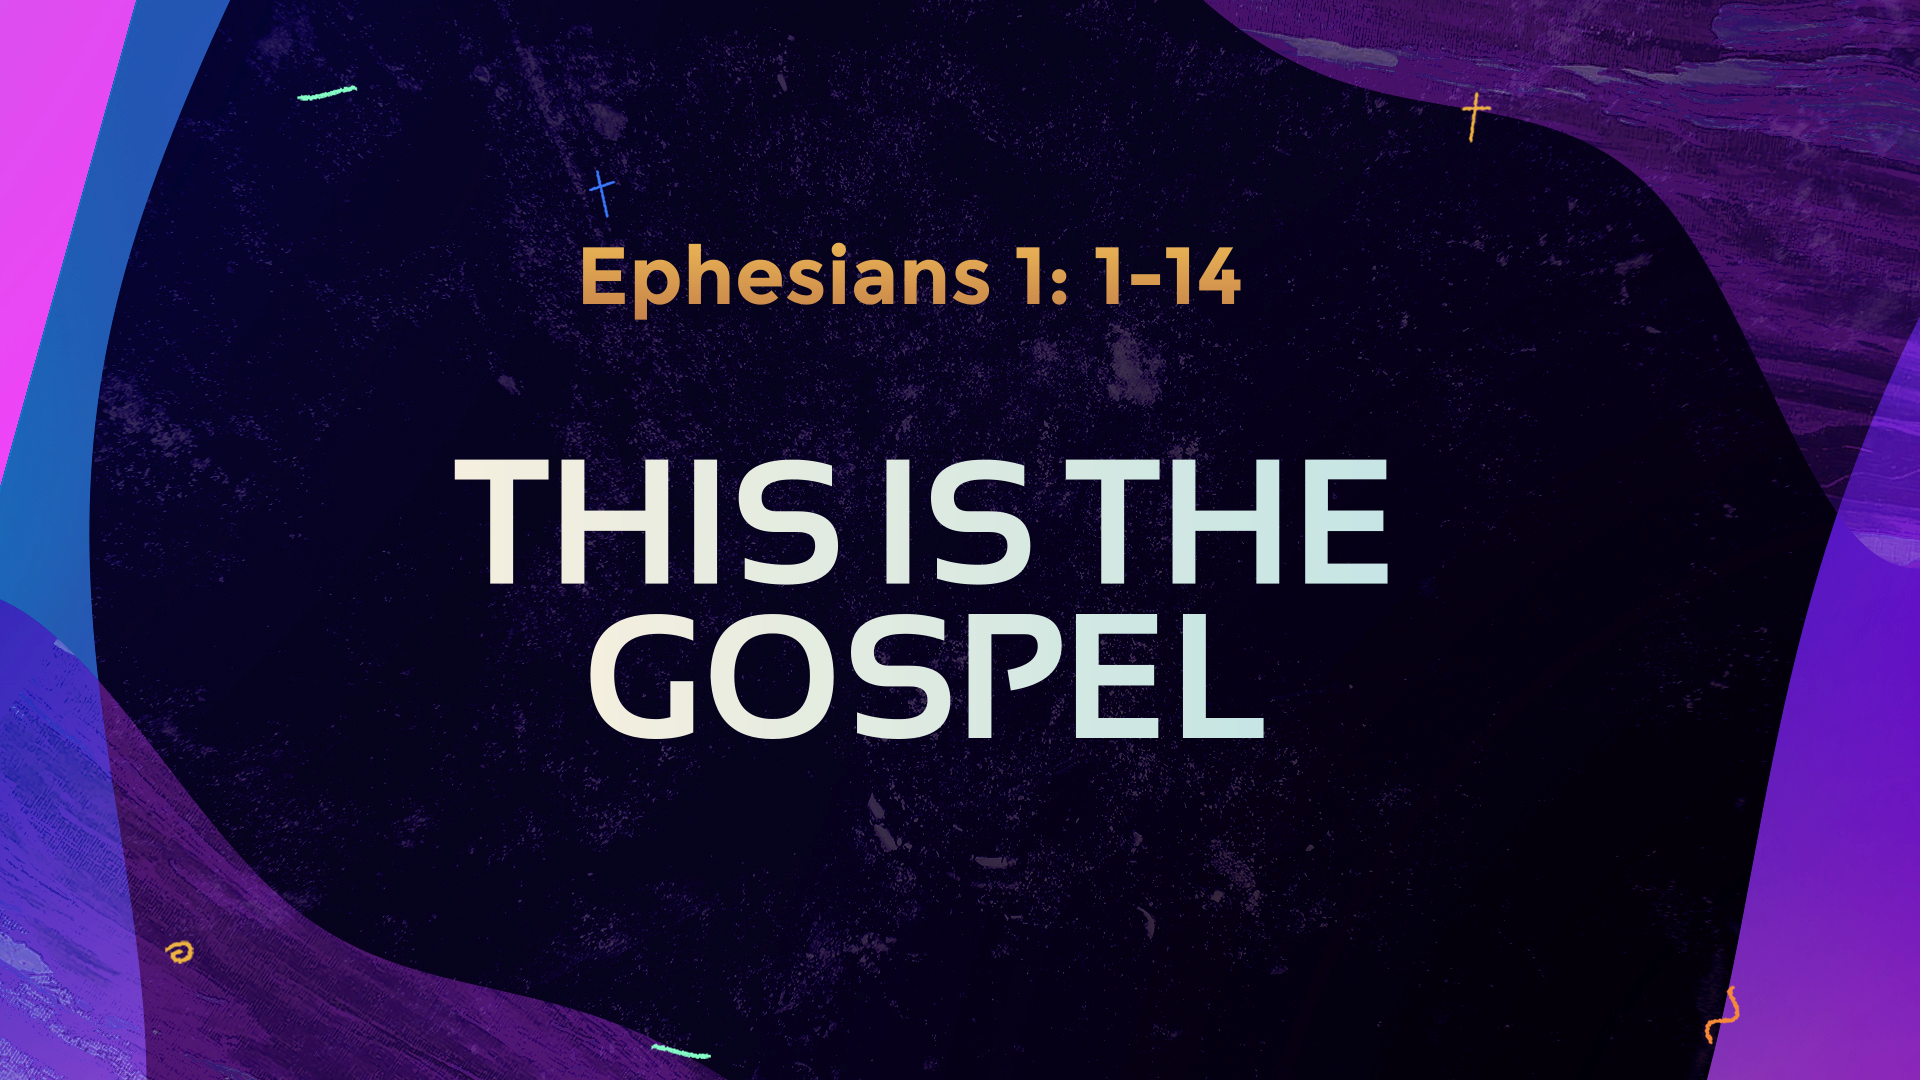 Feb 21, 2021 - This is The Gospel (Video) - Ephesians 1: 1-14